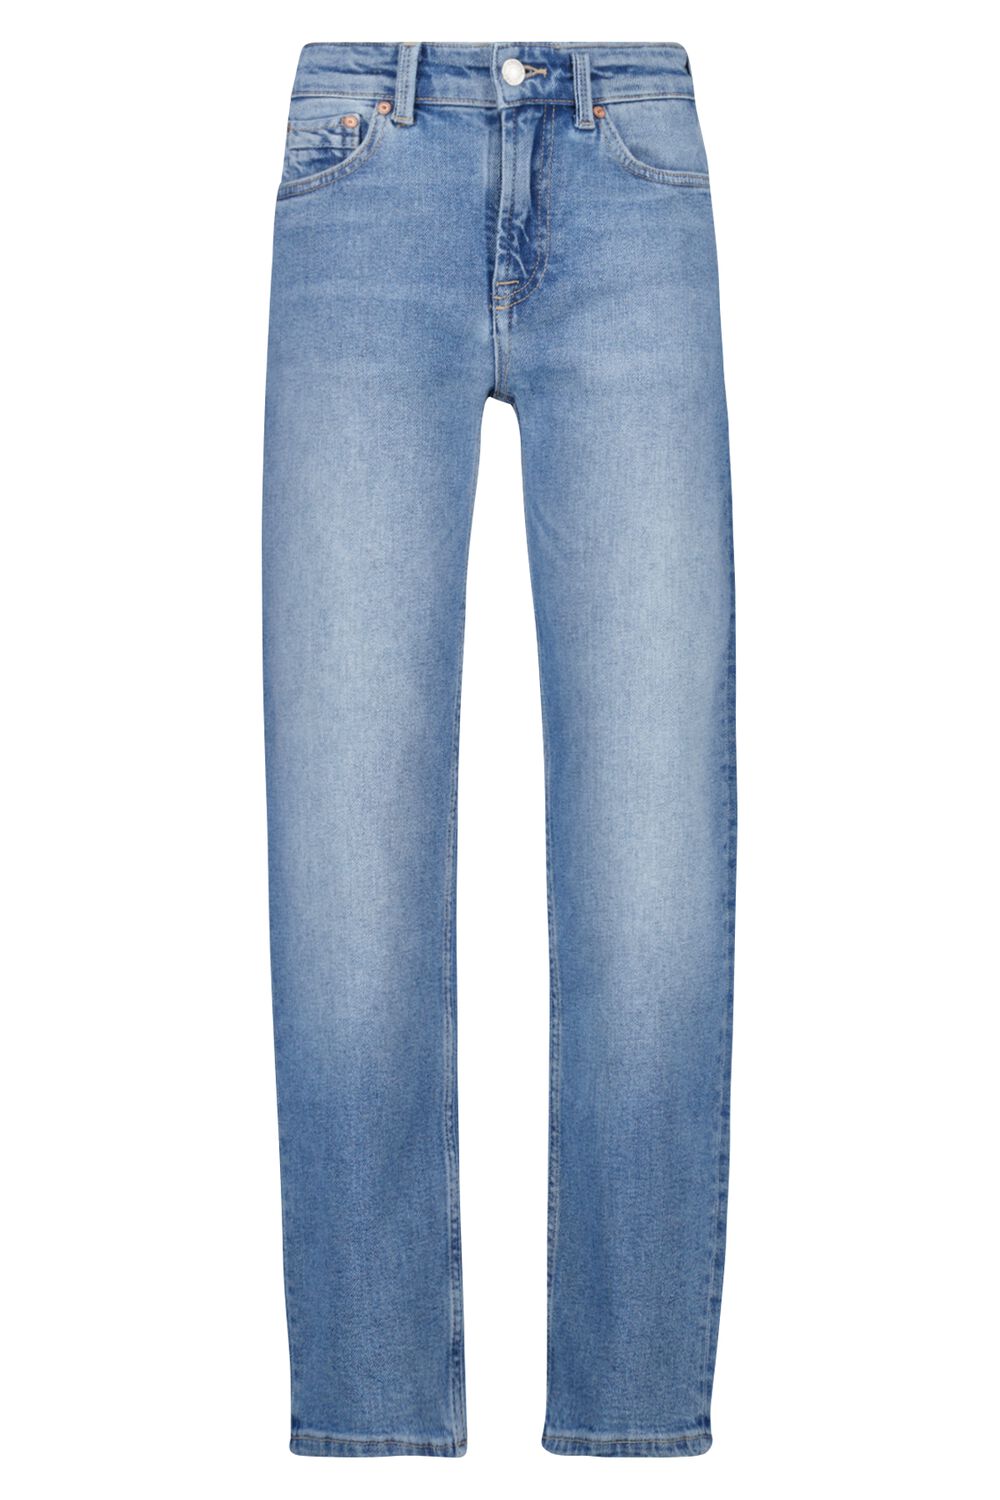 America Today Jongens Jeans Dallas Jr Blauw product